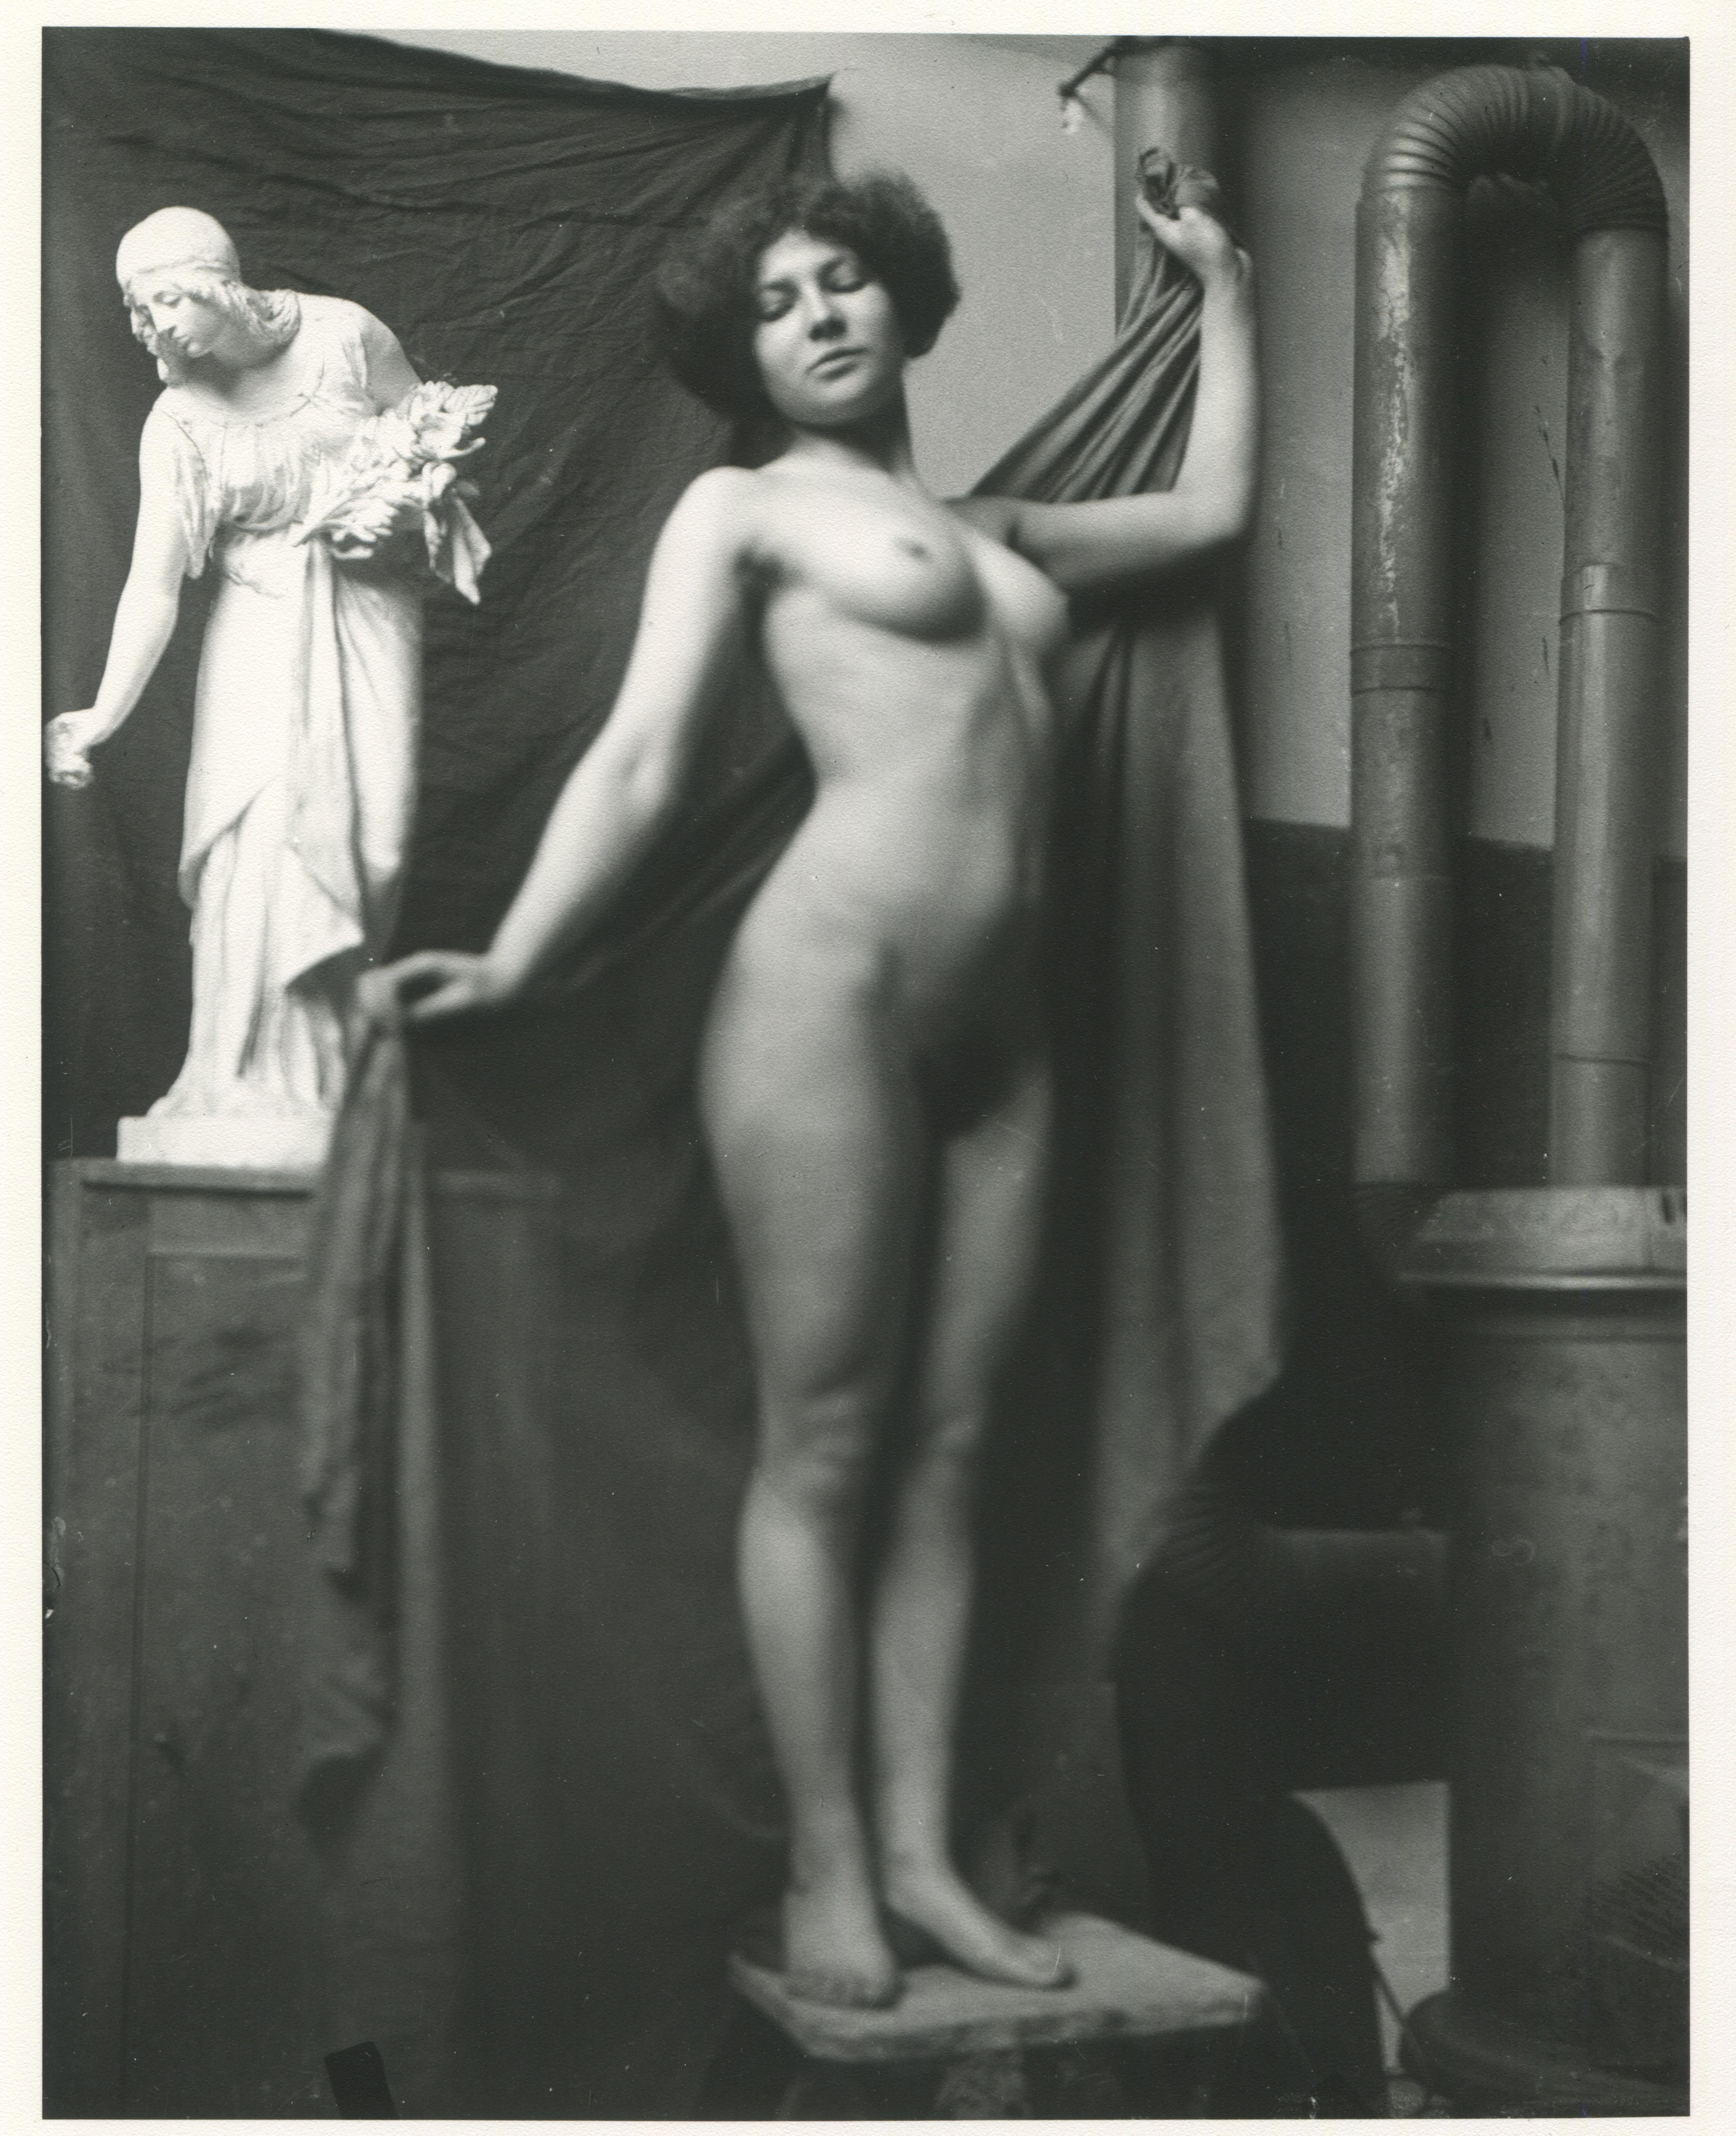  Heinrich Zille Black and White Photograph – Aktstudien – Edition griffelkunst